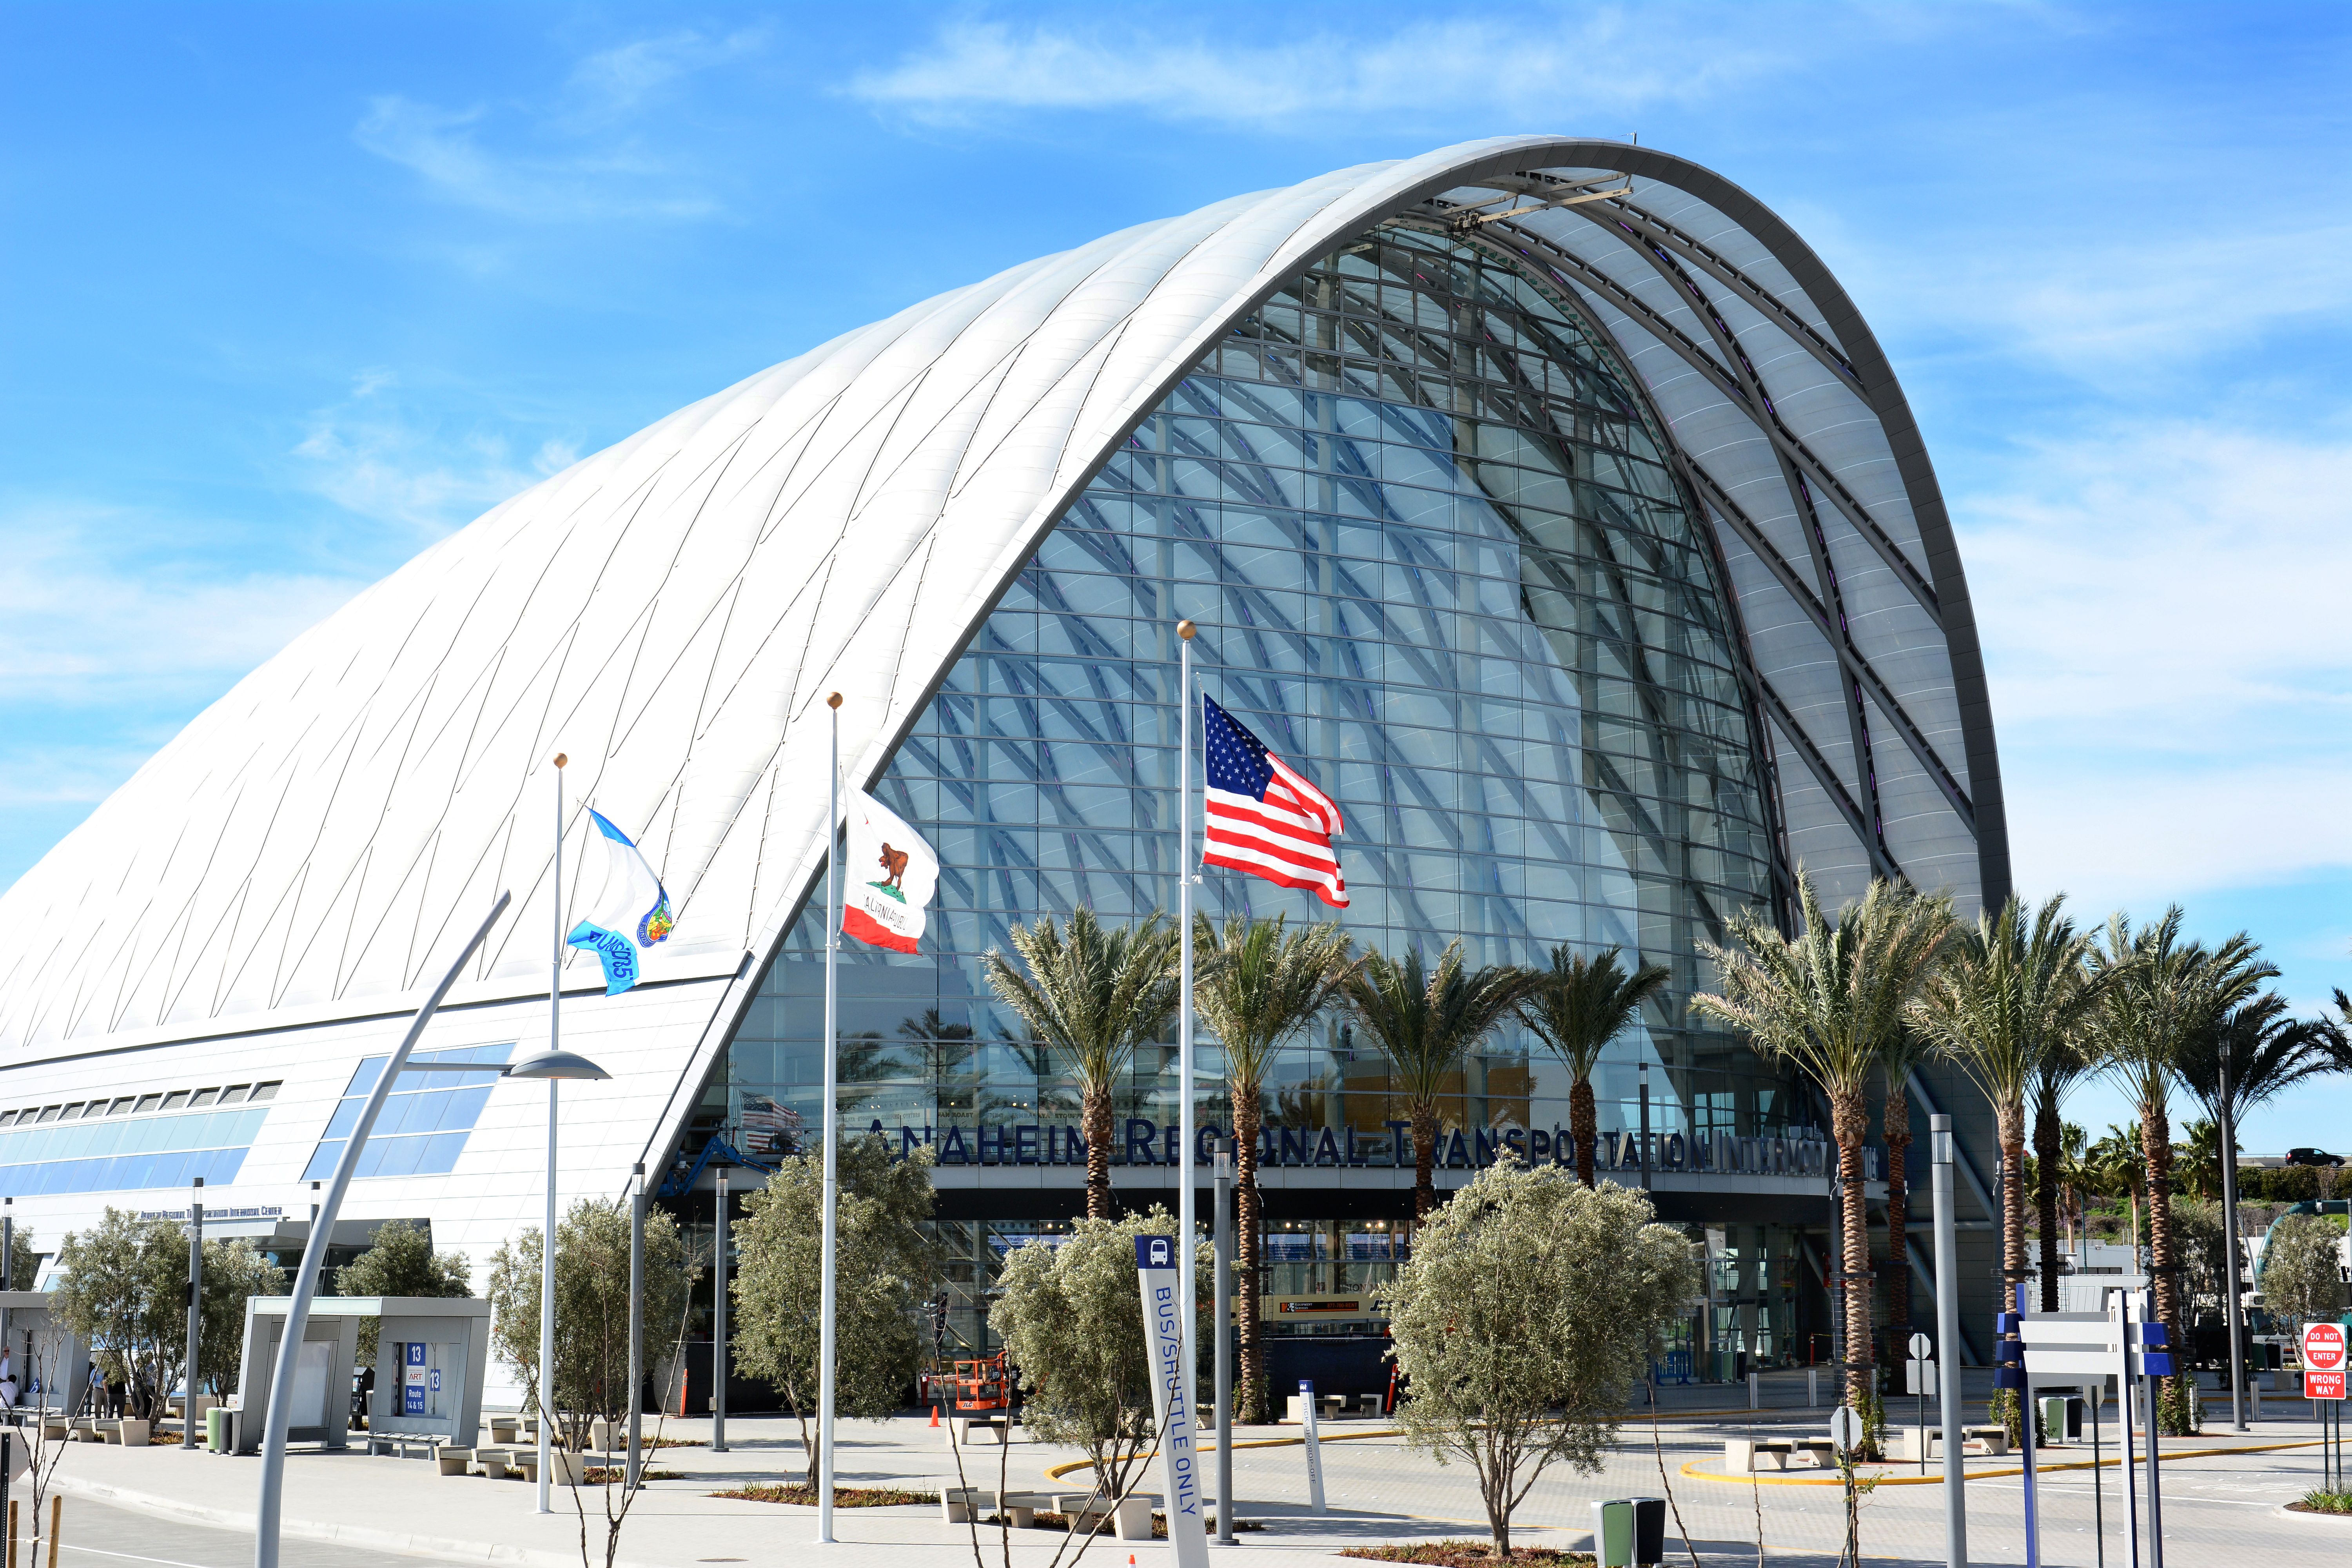 The Anaheim Regional Transportation Intermodal Center 